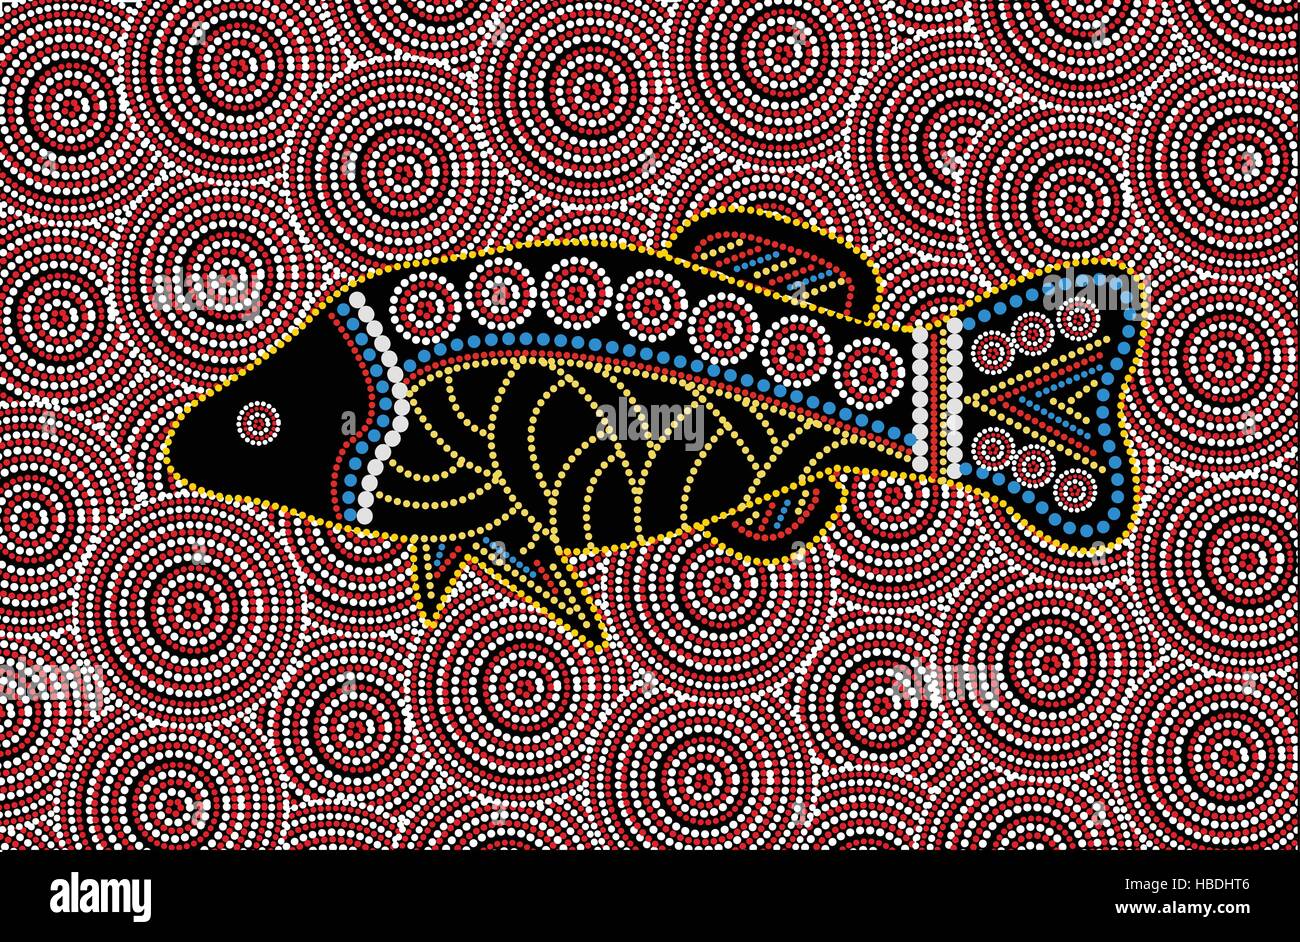 Aboriginal Fish Dot Painting Illustration Stock Vector Image Art Alamy